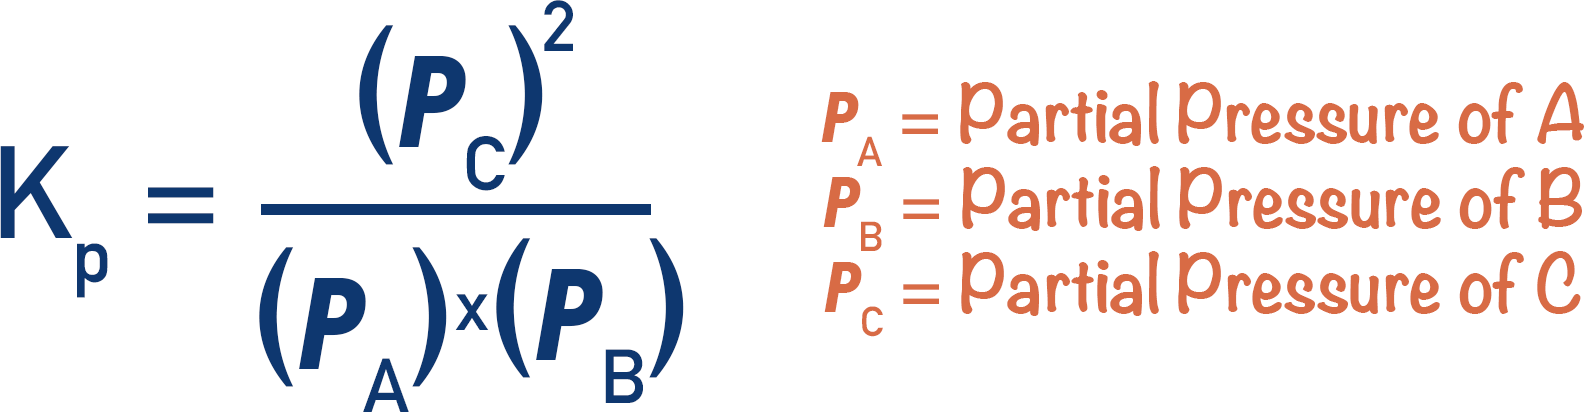 Kp expression partial pressures equilibrium constant a-level chemistry